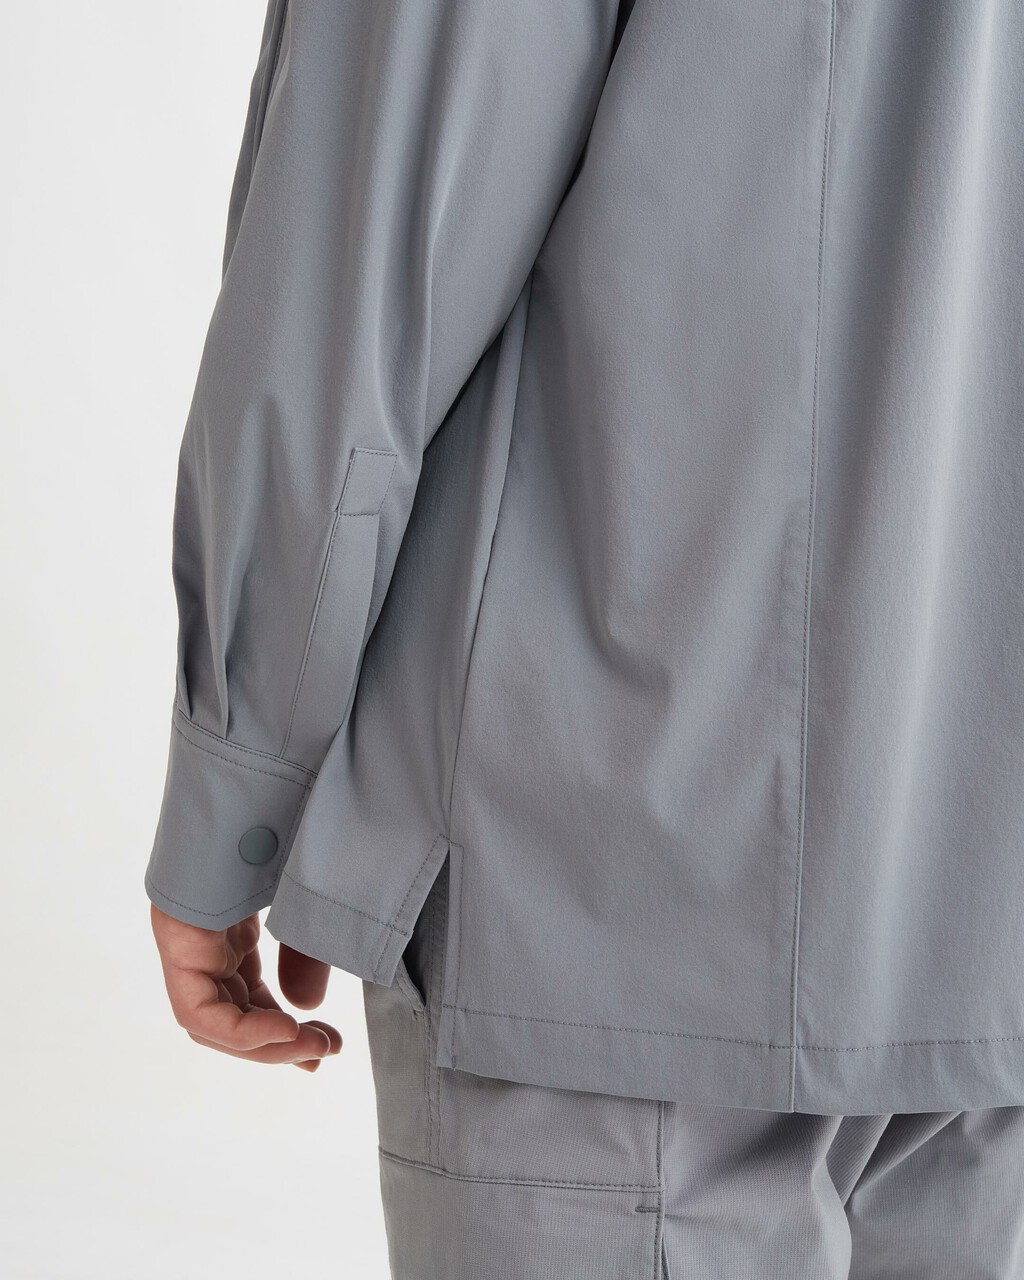 PREMIUM ESSENTIALS 裇衫款外套, Overcast Grey, hi-res